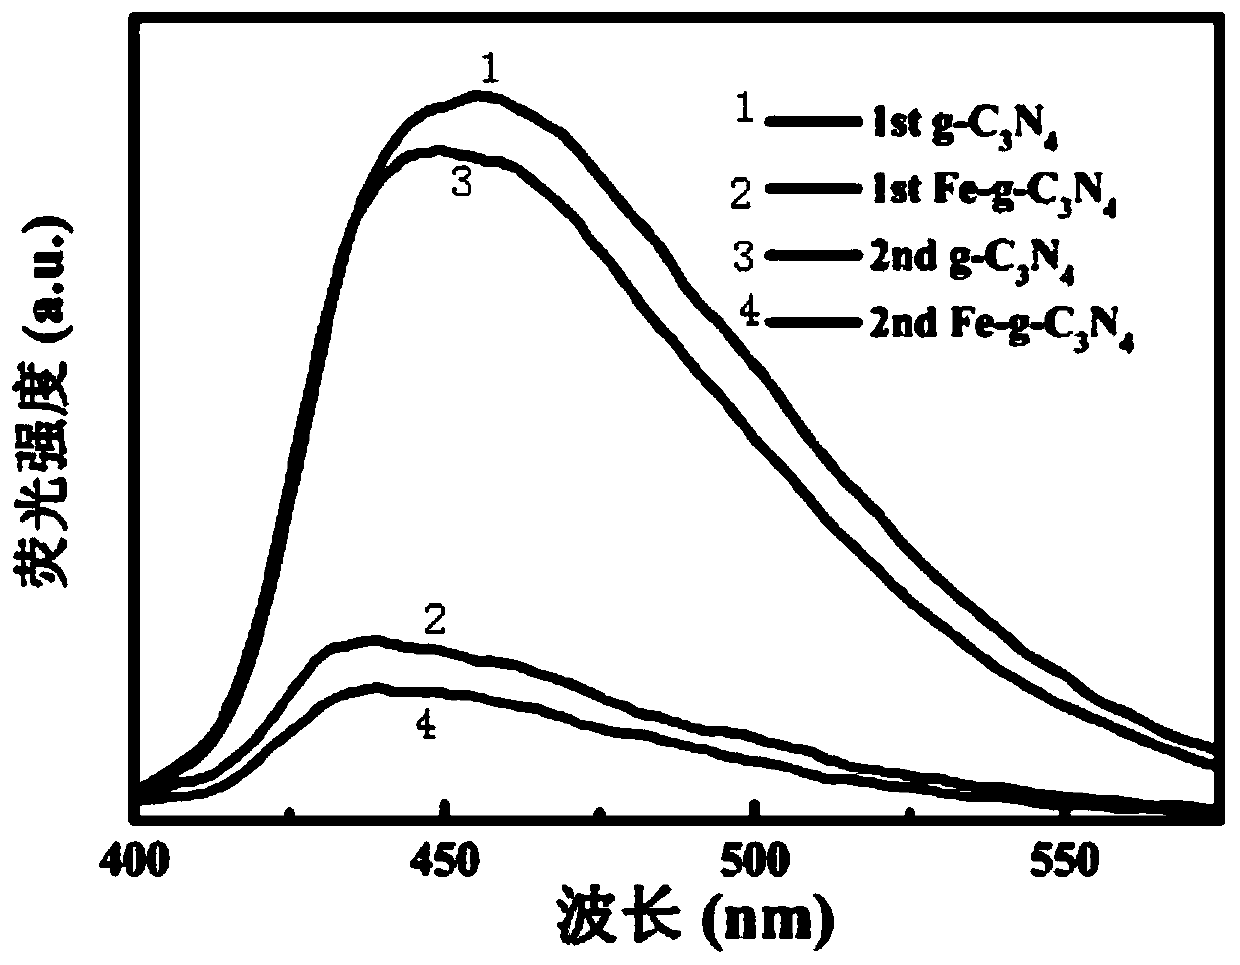 Preparation method of Fe-g-C3N4 multifunctional nano composite material